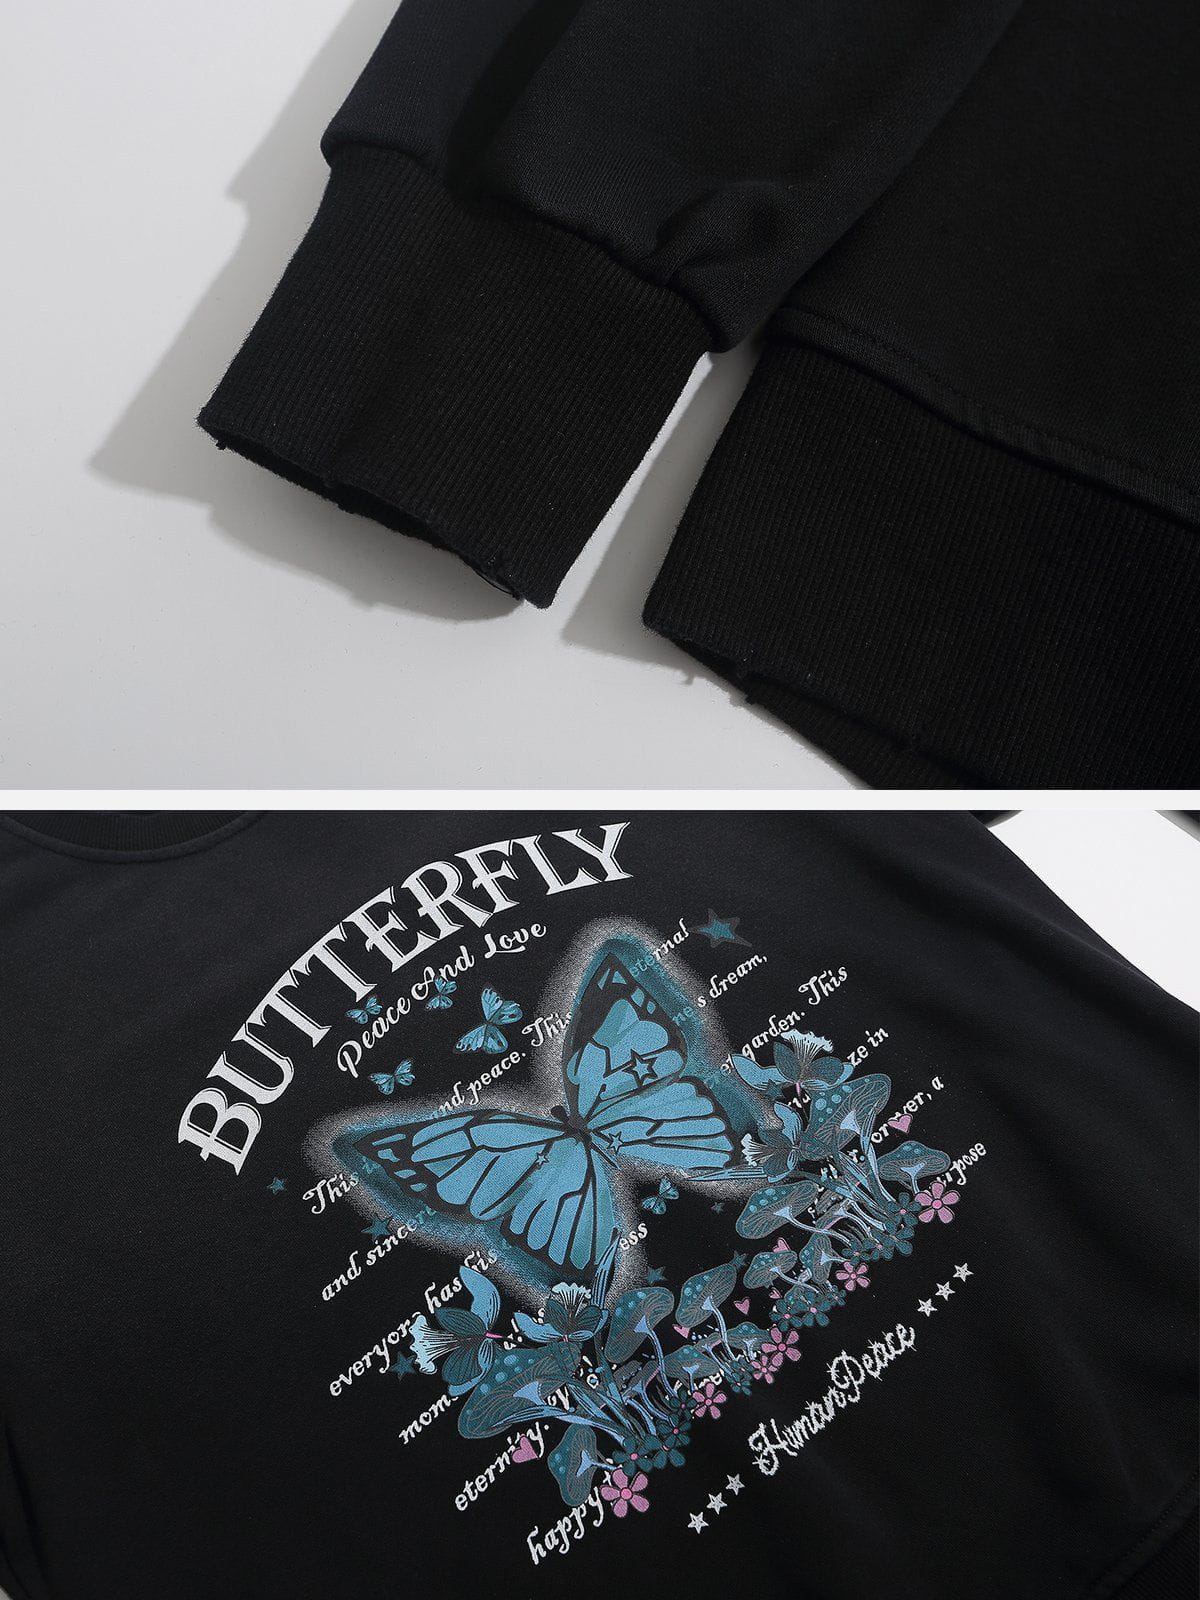 LUXENFY™ - "BUTTERFLY" Print Sweatshirt luxenfy.com